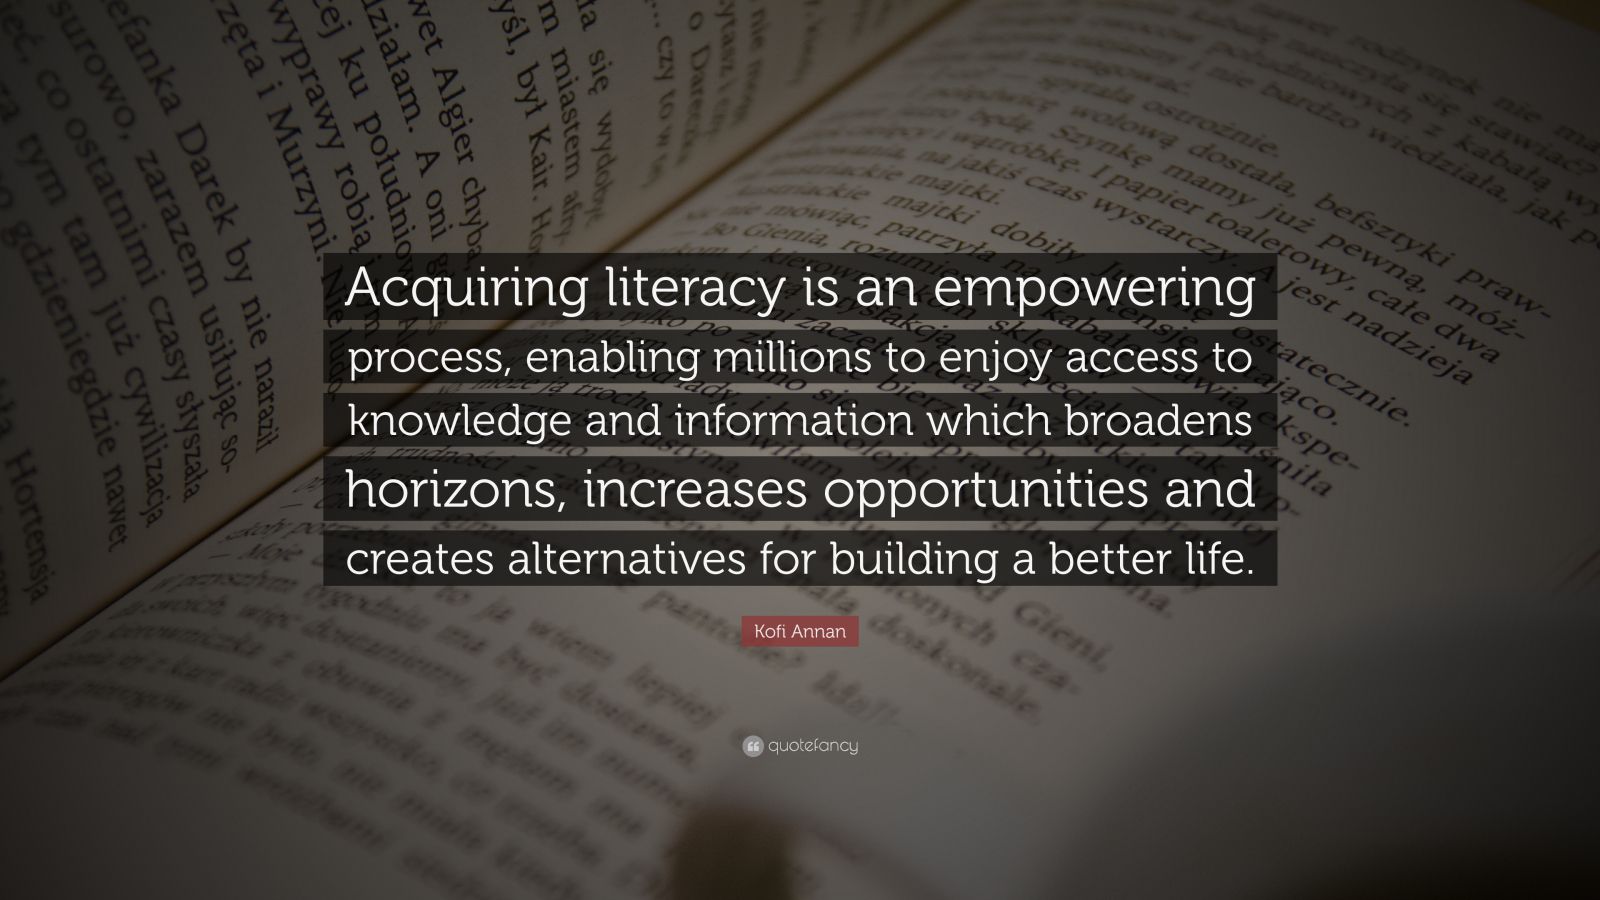 Kofi Annan Quote: “Acquiring literacy is an empowering process